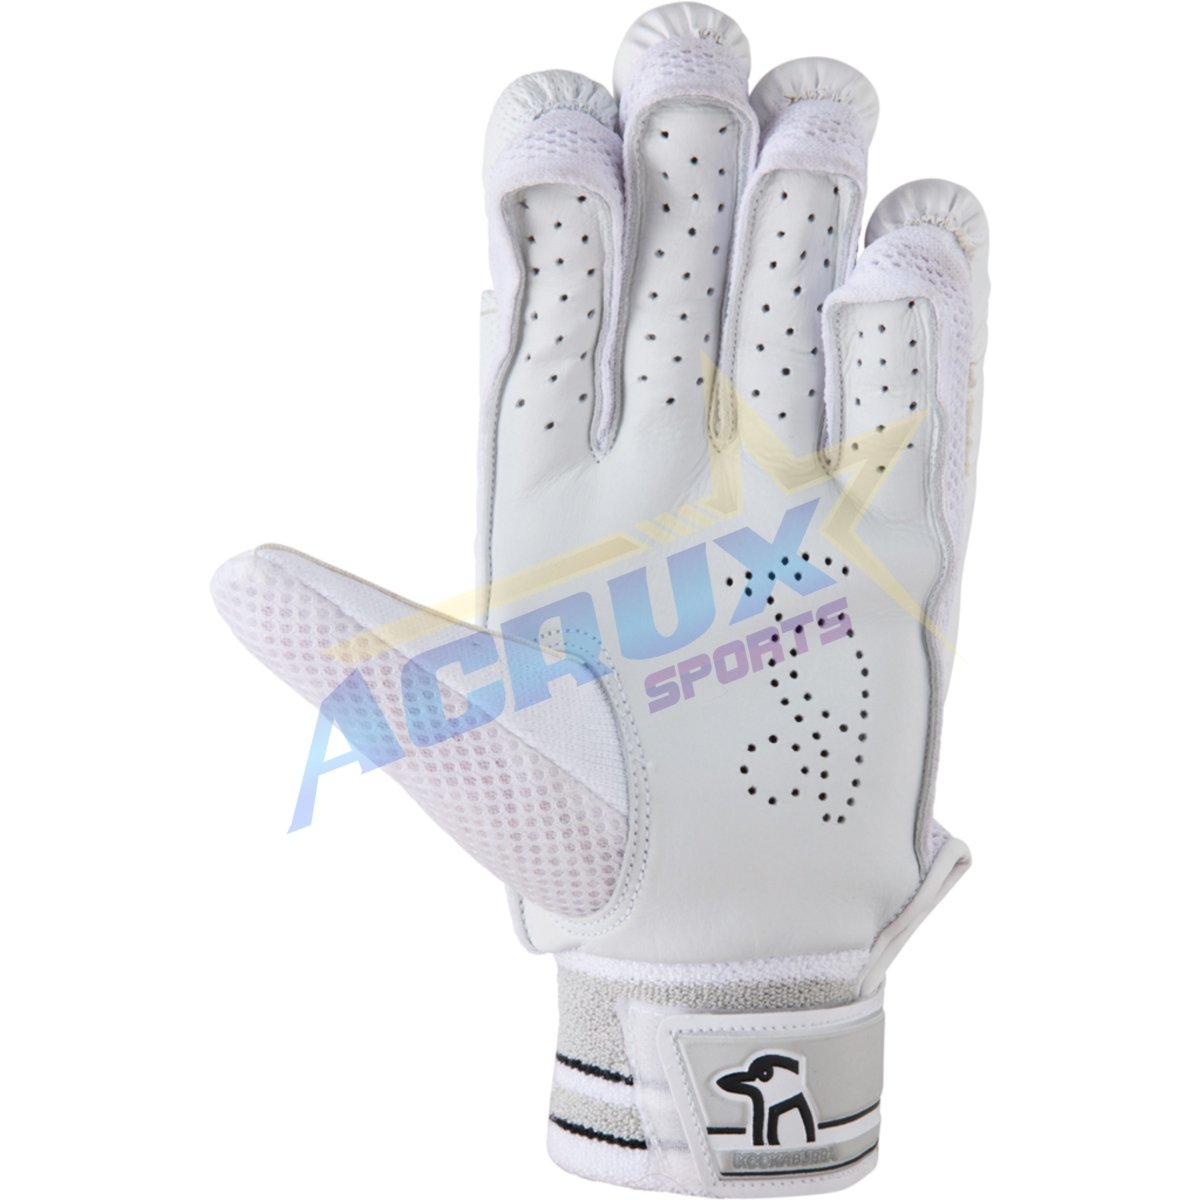 Kookaburra Ghost Pro 6.0 Junior Cricket Batting Gloves.